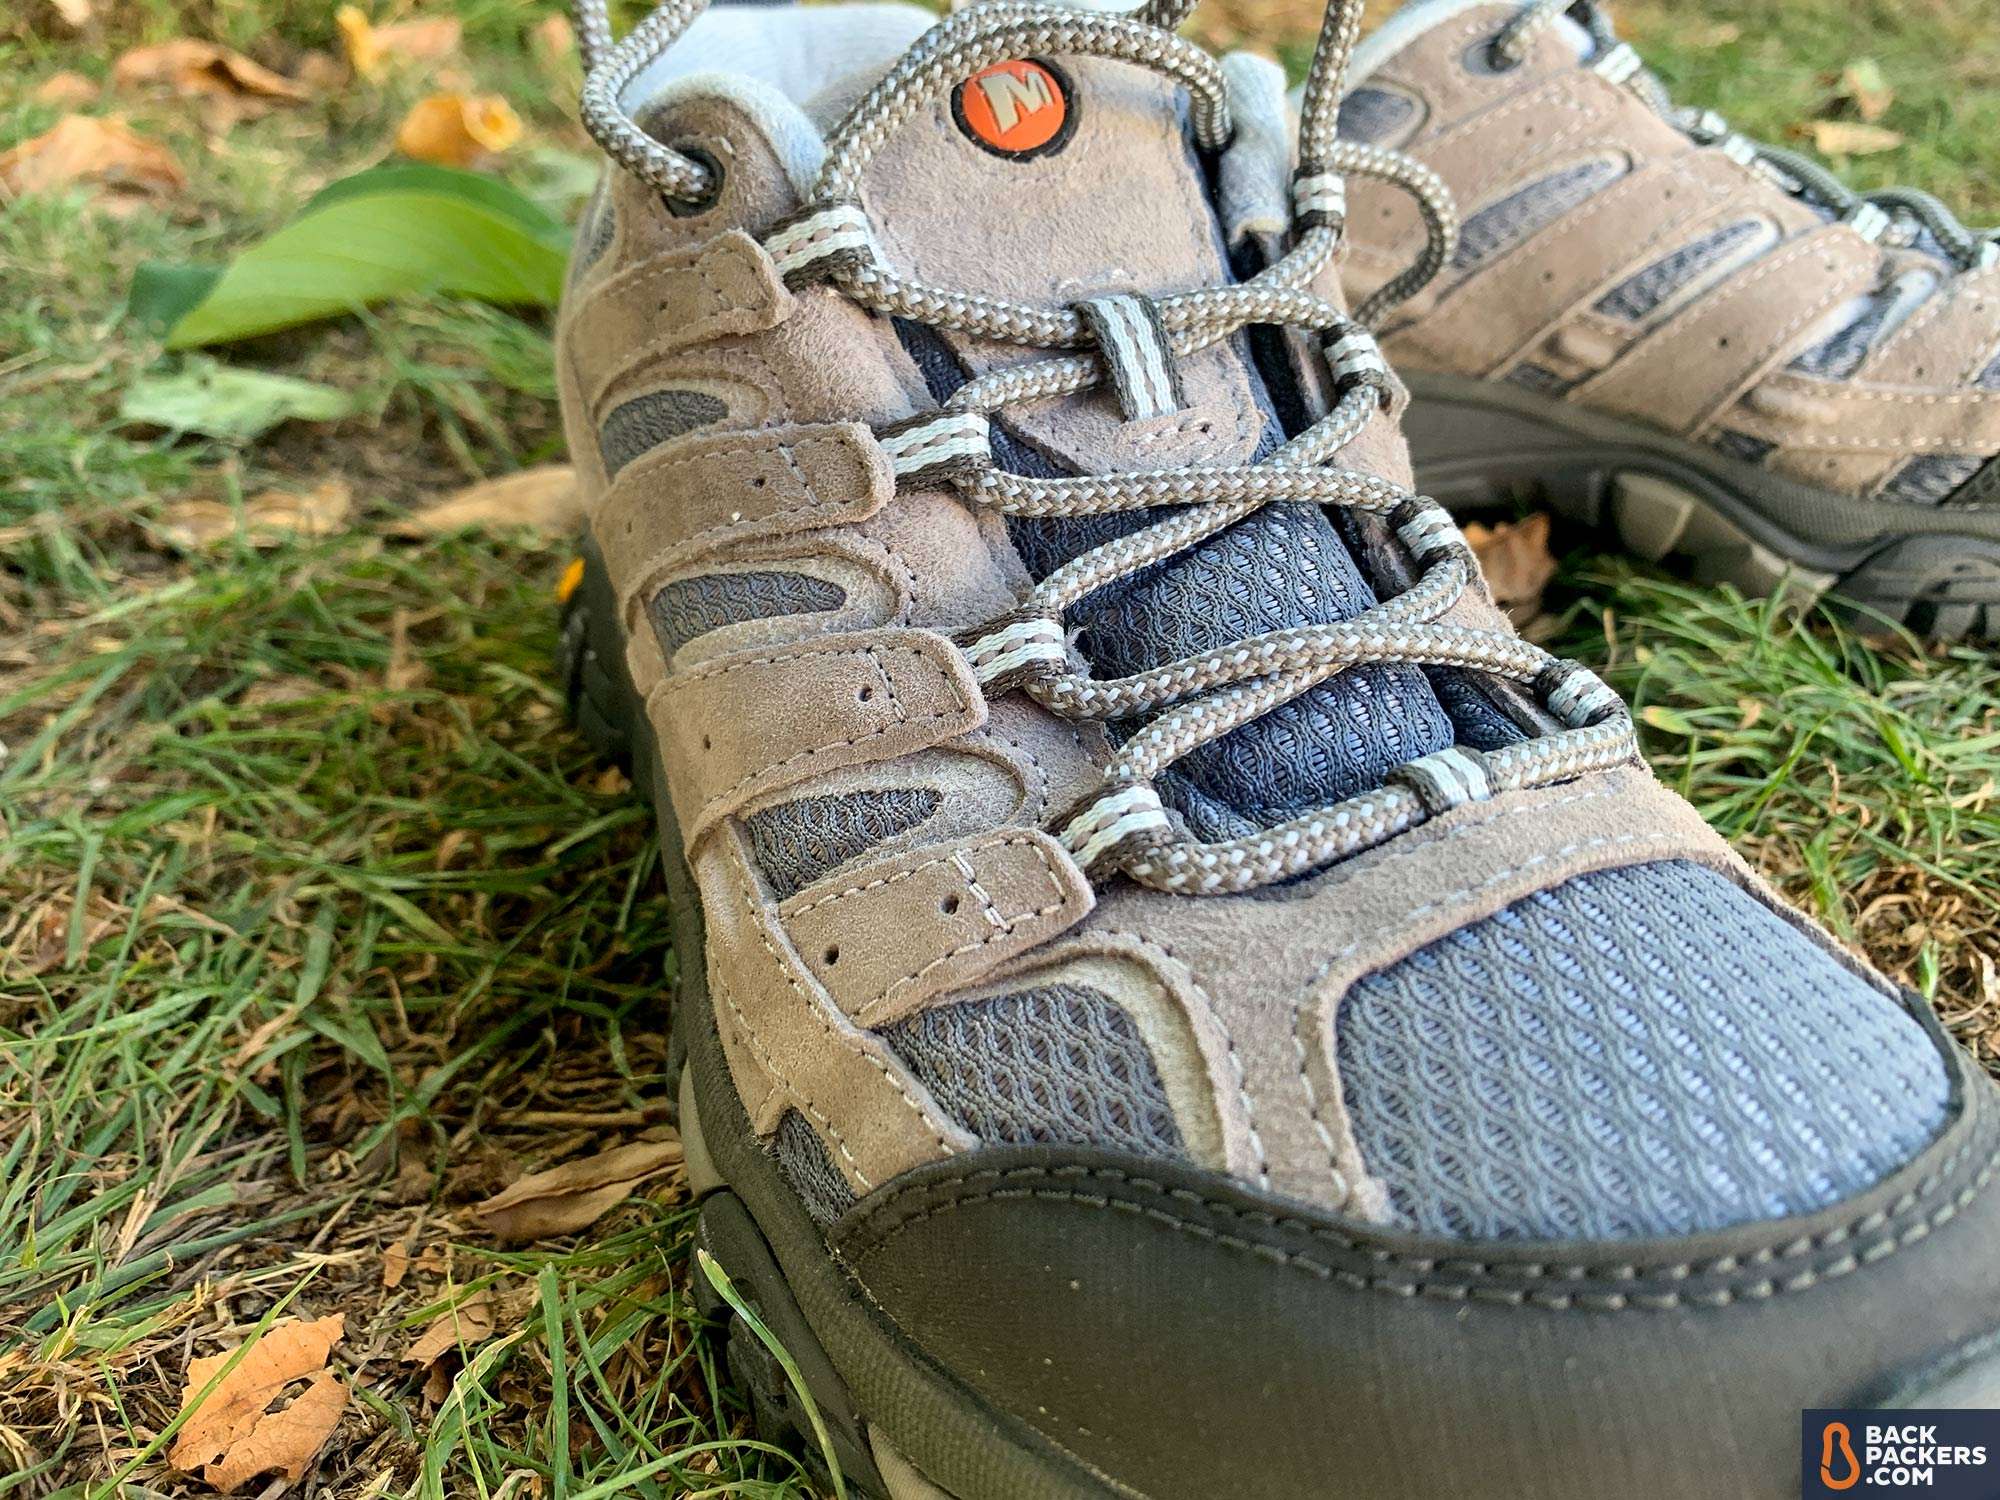 Meet Merrell Moab 2 Ventilator: The Classic Hiking Shoe